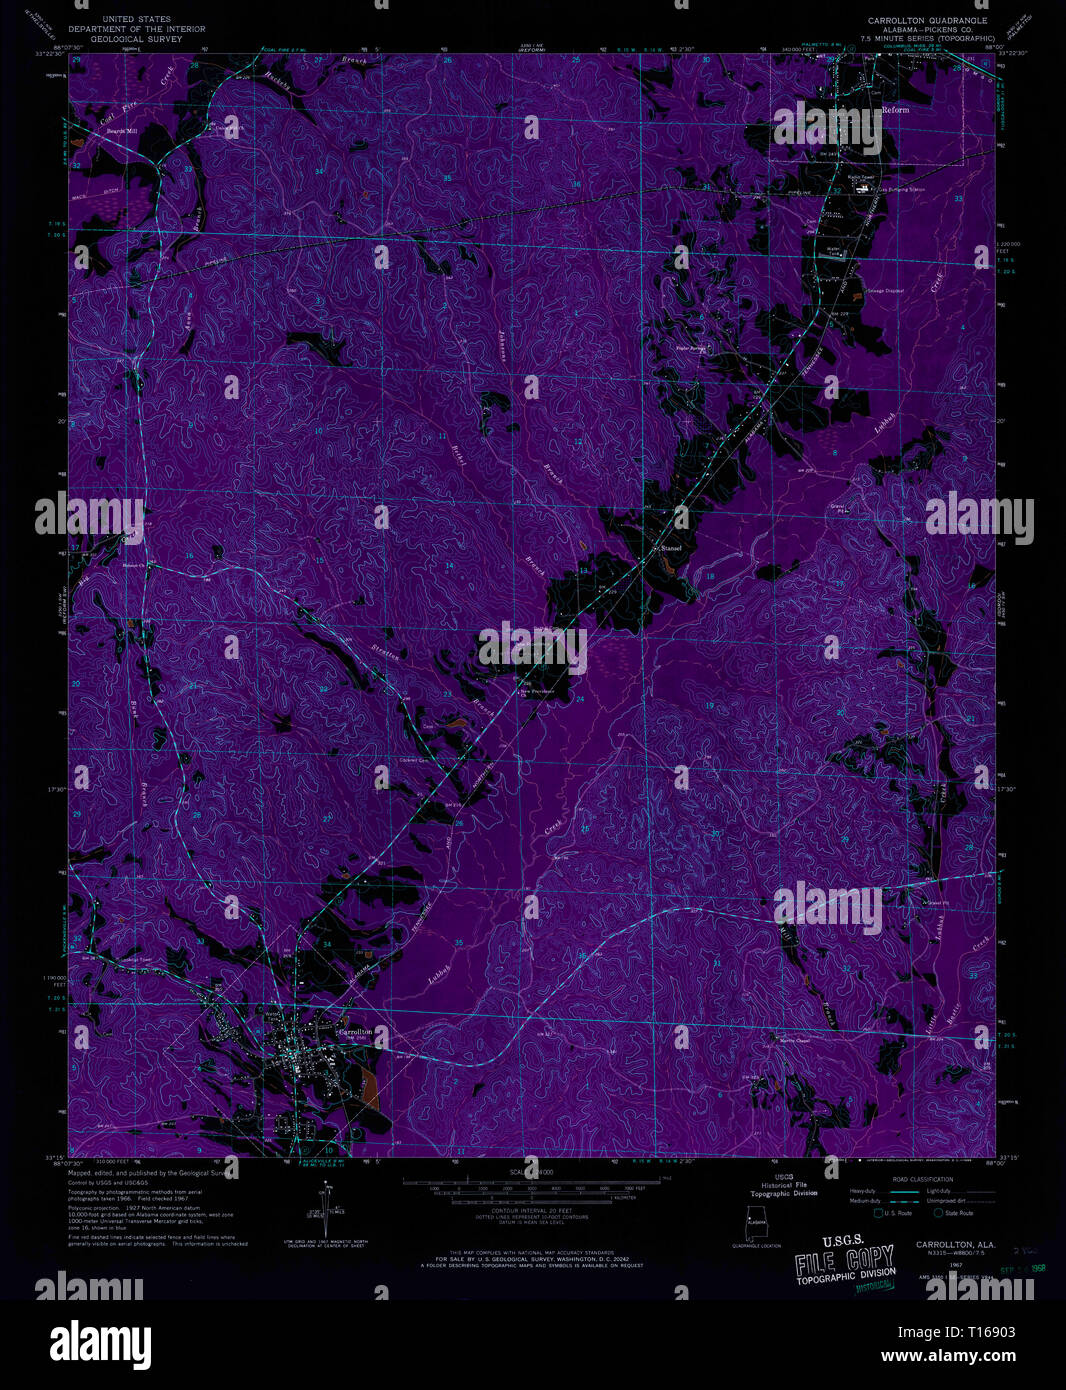 USGS TOPO Map Alabama AL Carrollton 303420 1967 24000 Inverted Stock Photo